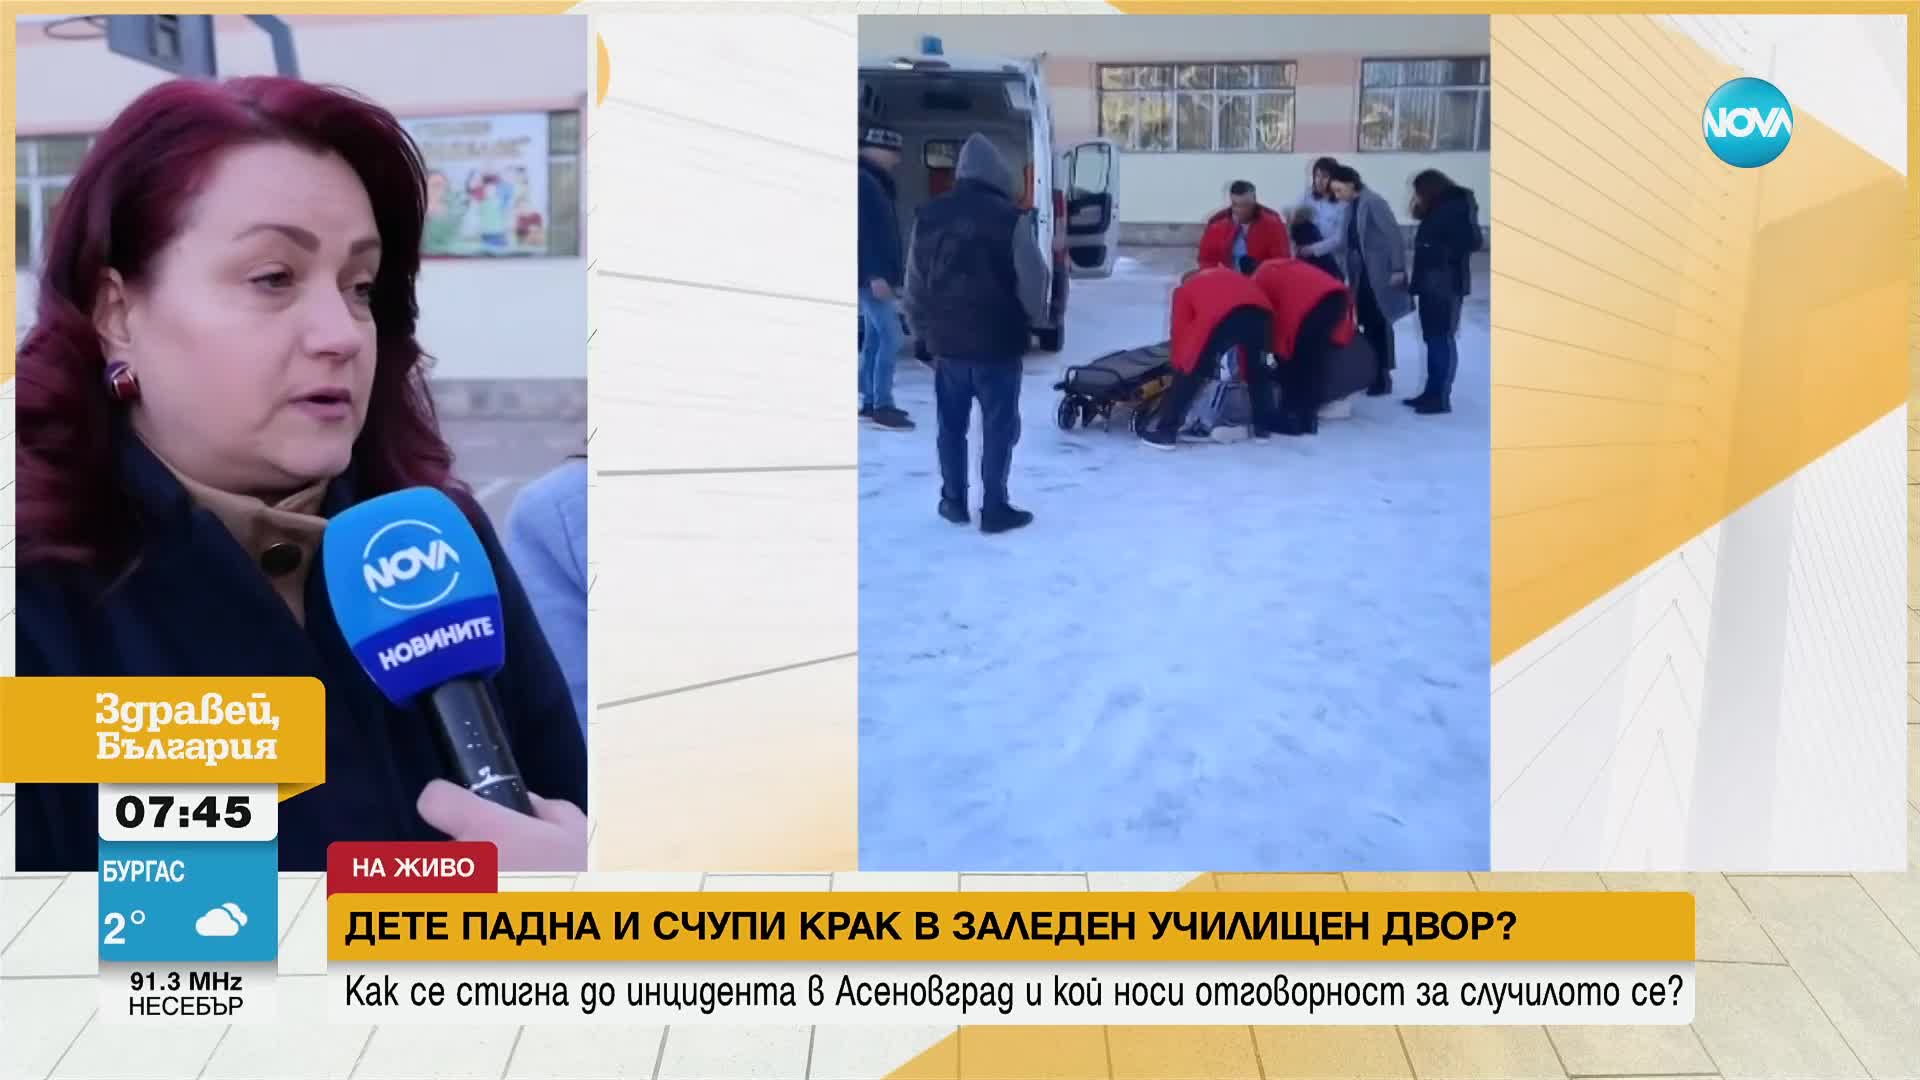 Дете падна и счупи крак в заледен училищен двор в Асеновград